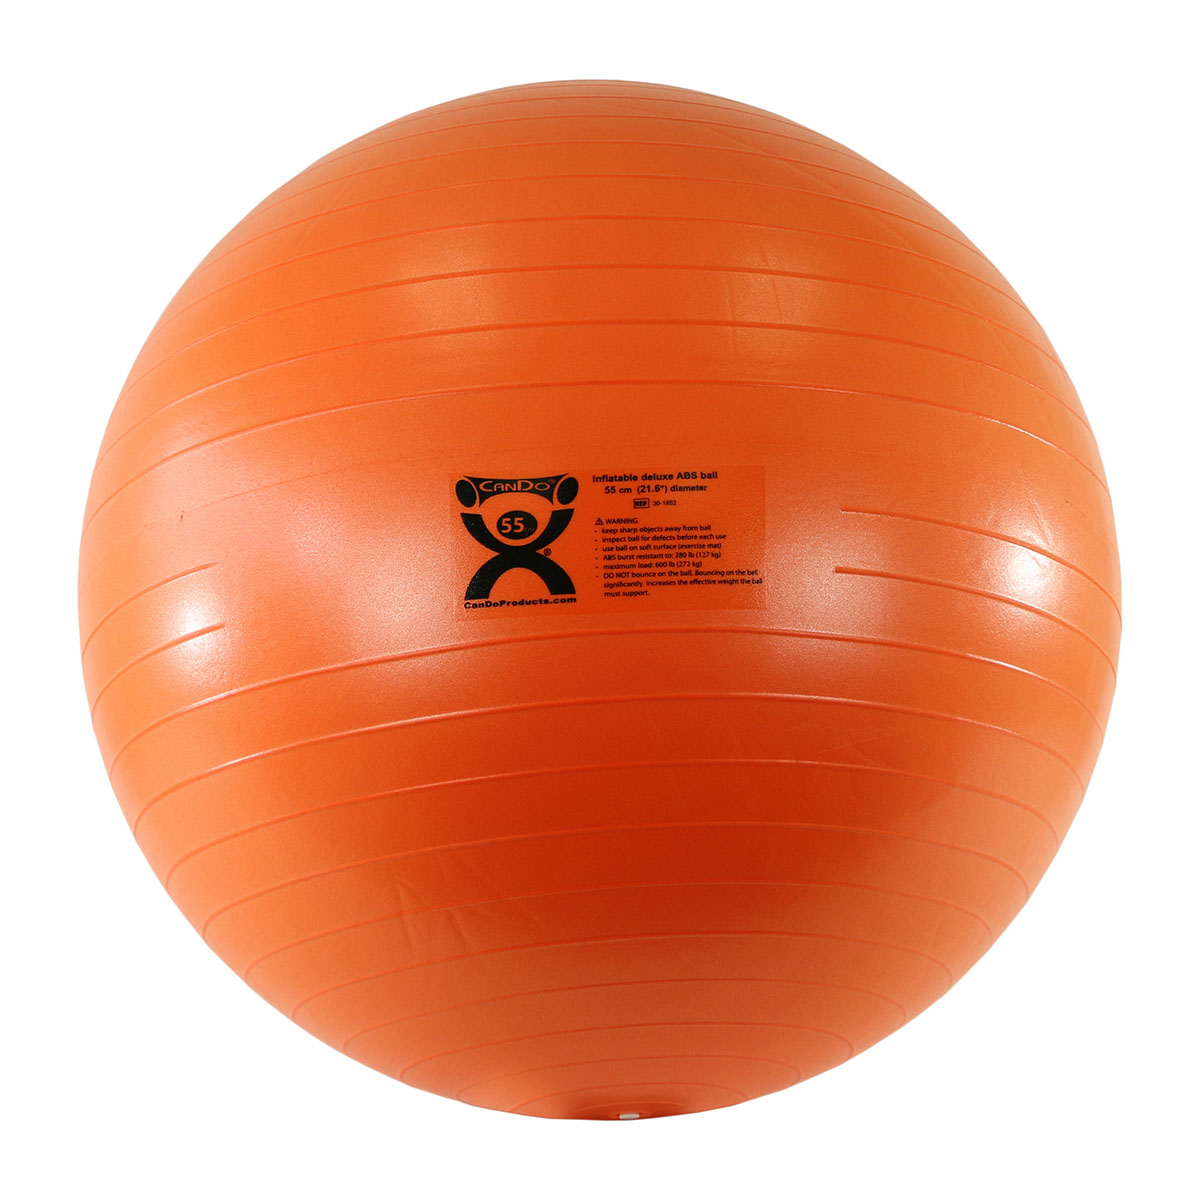 Cando Deluxe Anti-Burst Exercise Ball, orange, 55cm - 1008999